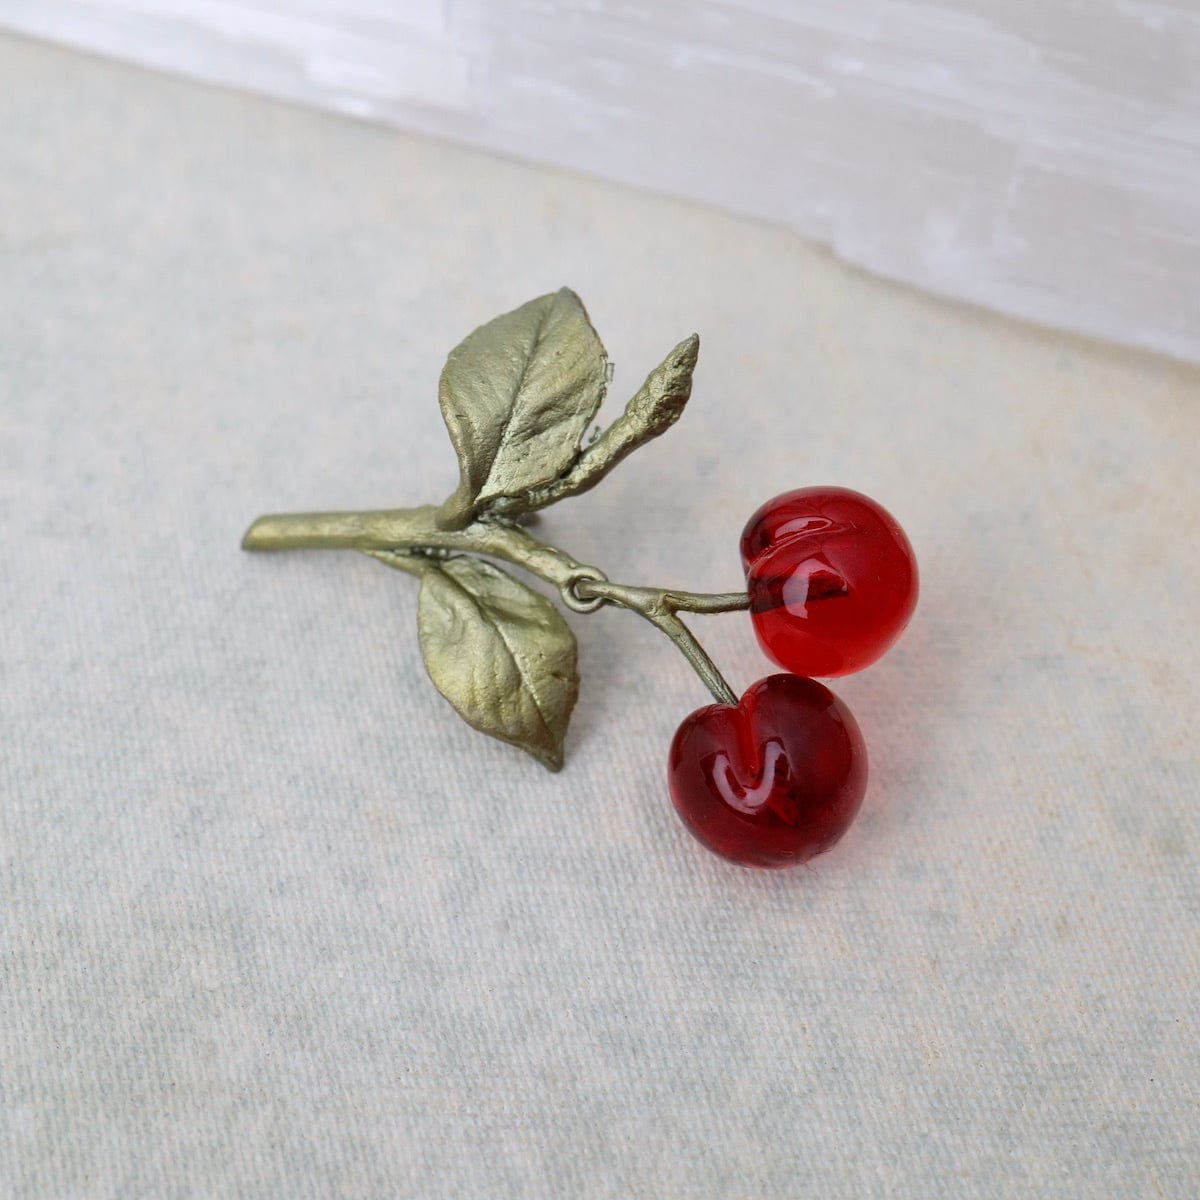 PIN Morello Cherry Lapel Pin